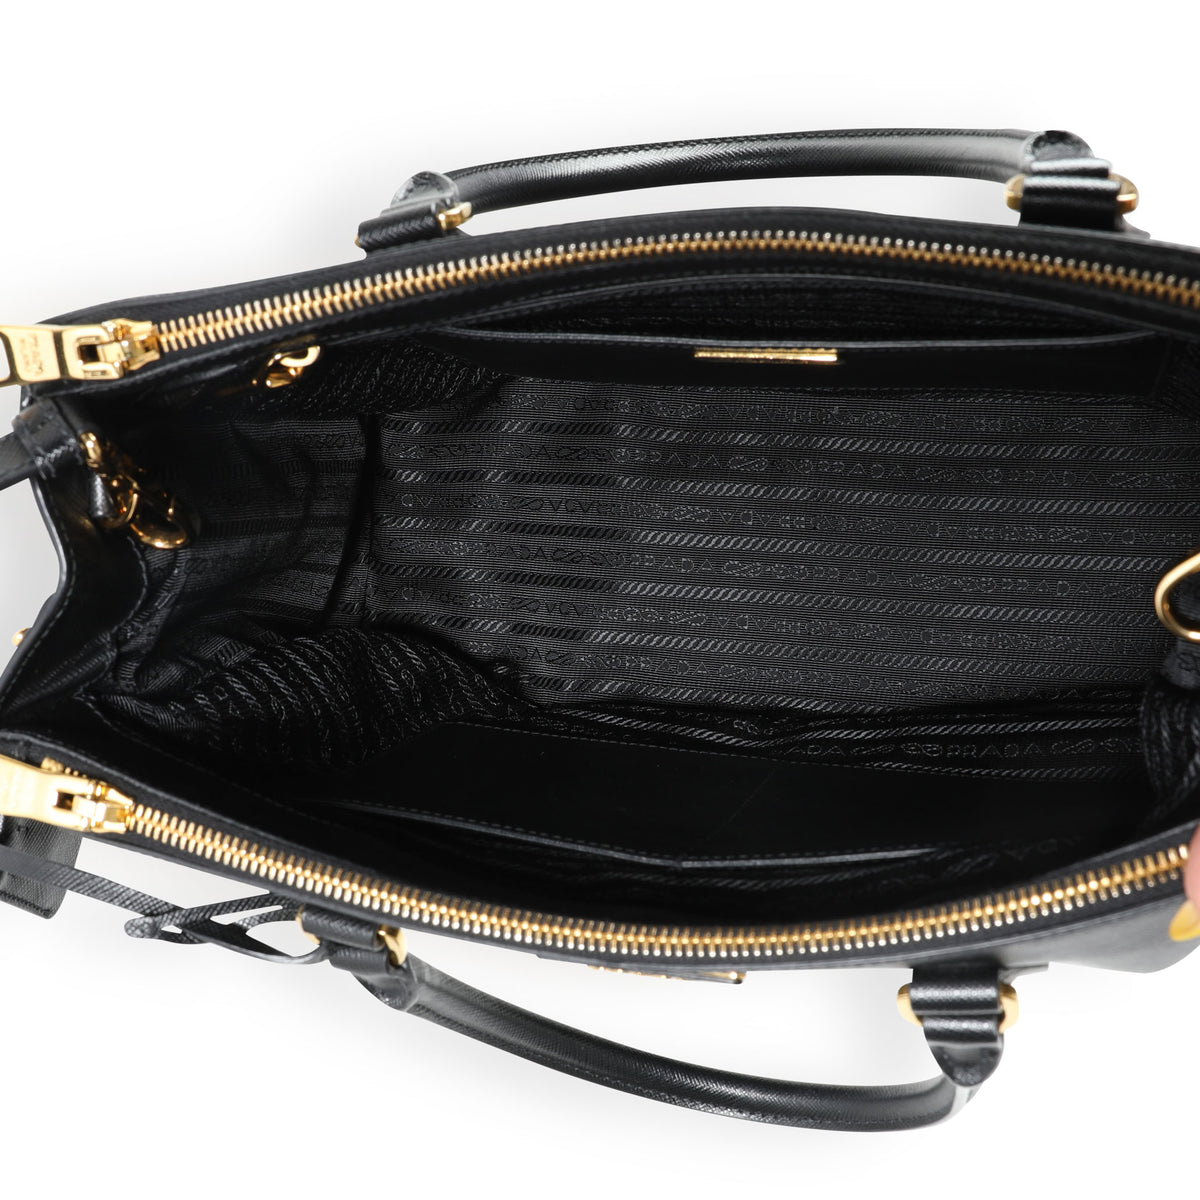 Prada Galleria Saffiano Leather Mini Bag Nero, Black